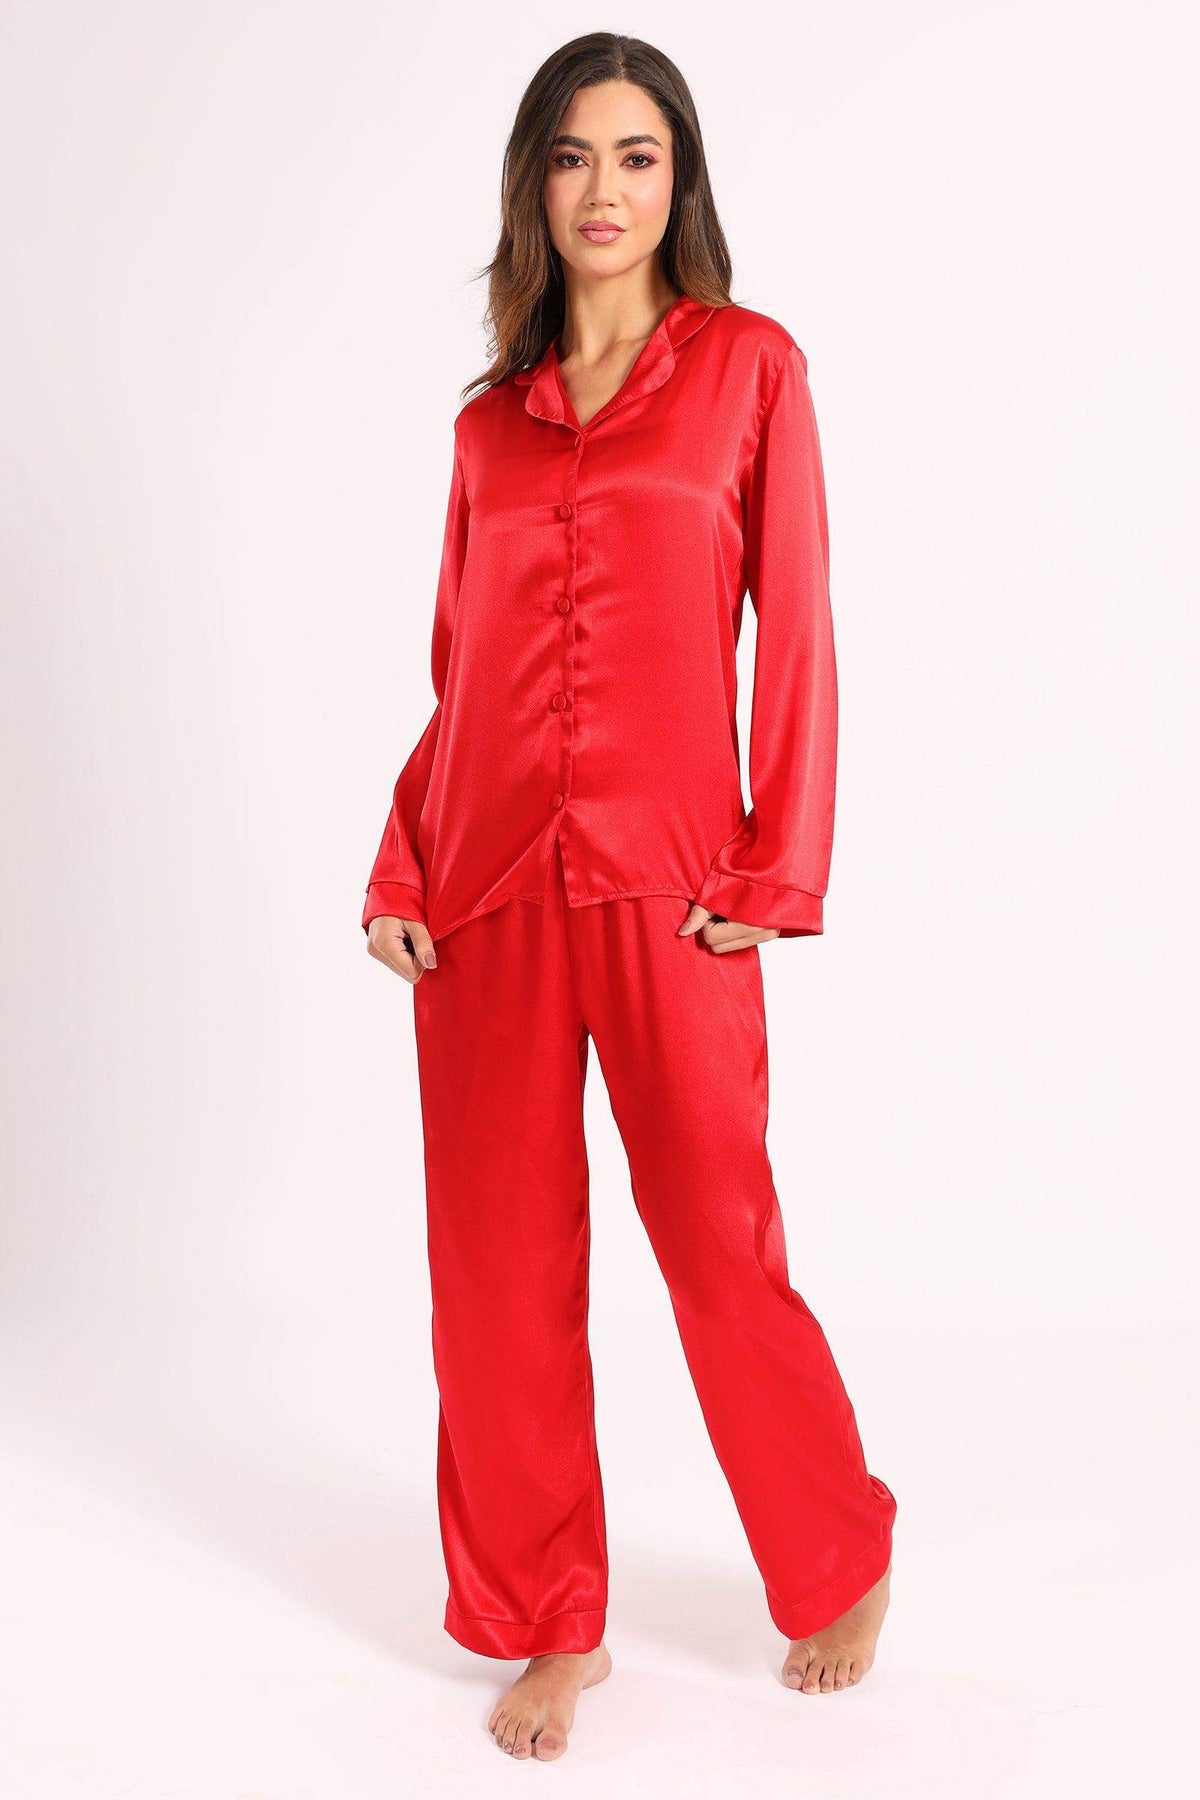 Red Satin Pyjama Set - Carina - كارينا